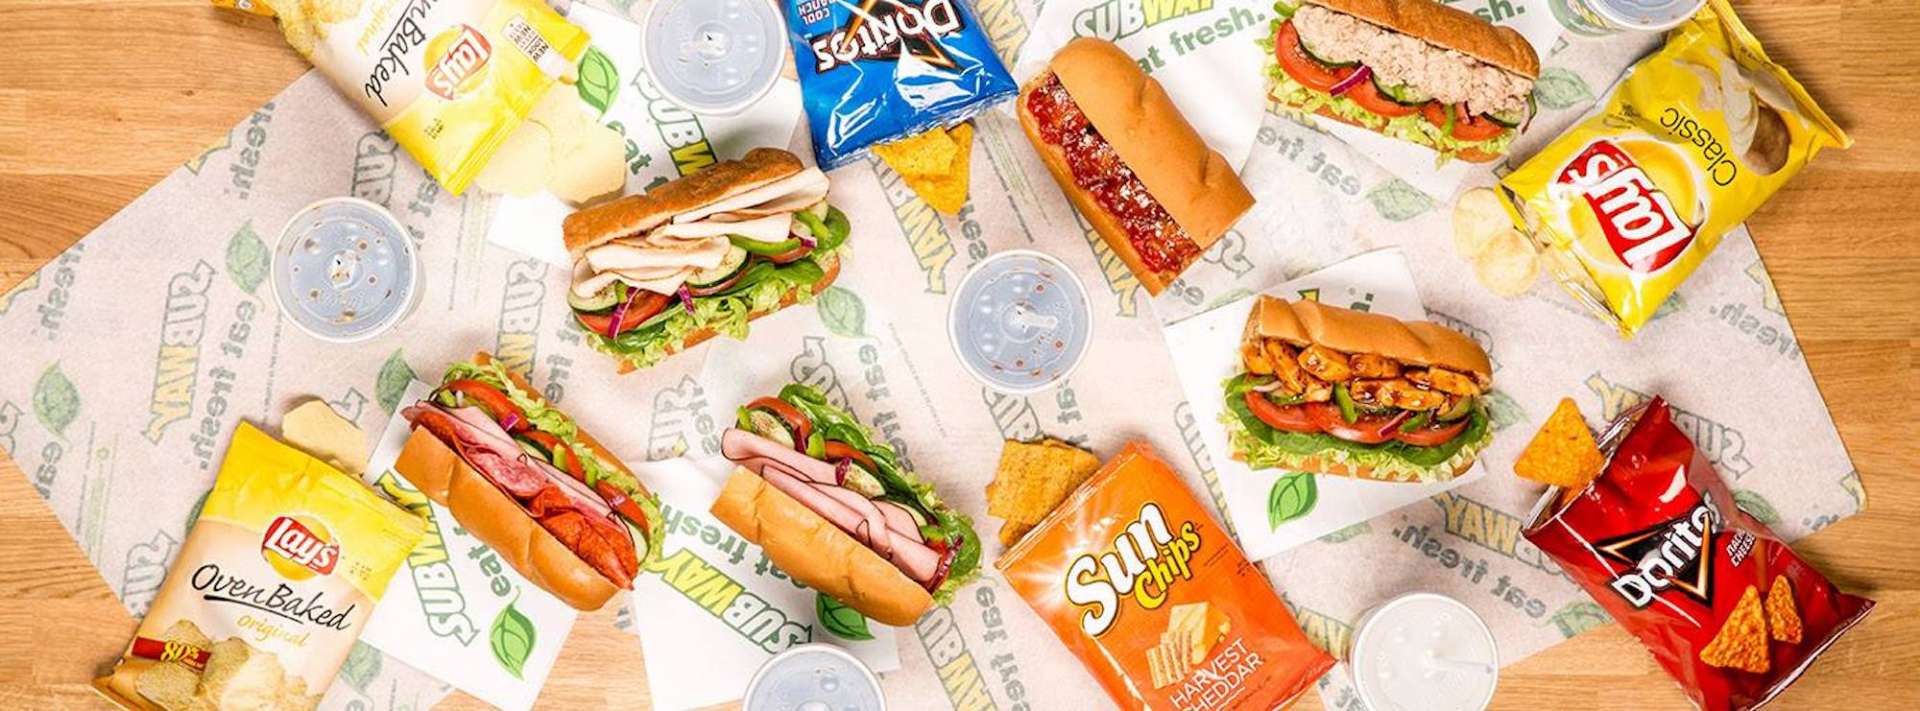 The 10 Best Subway Sandwiches, Ranked - UrbanMatter